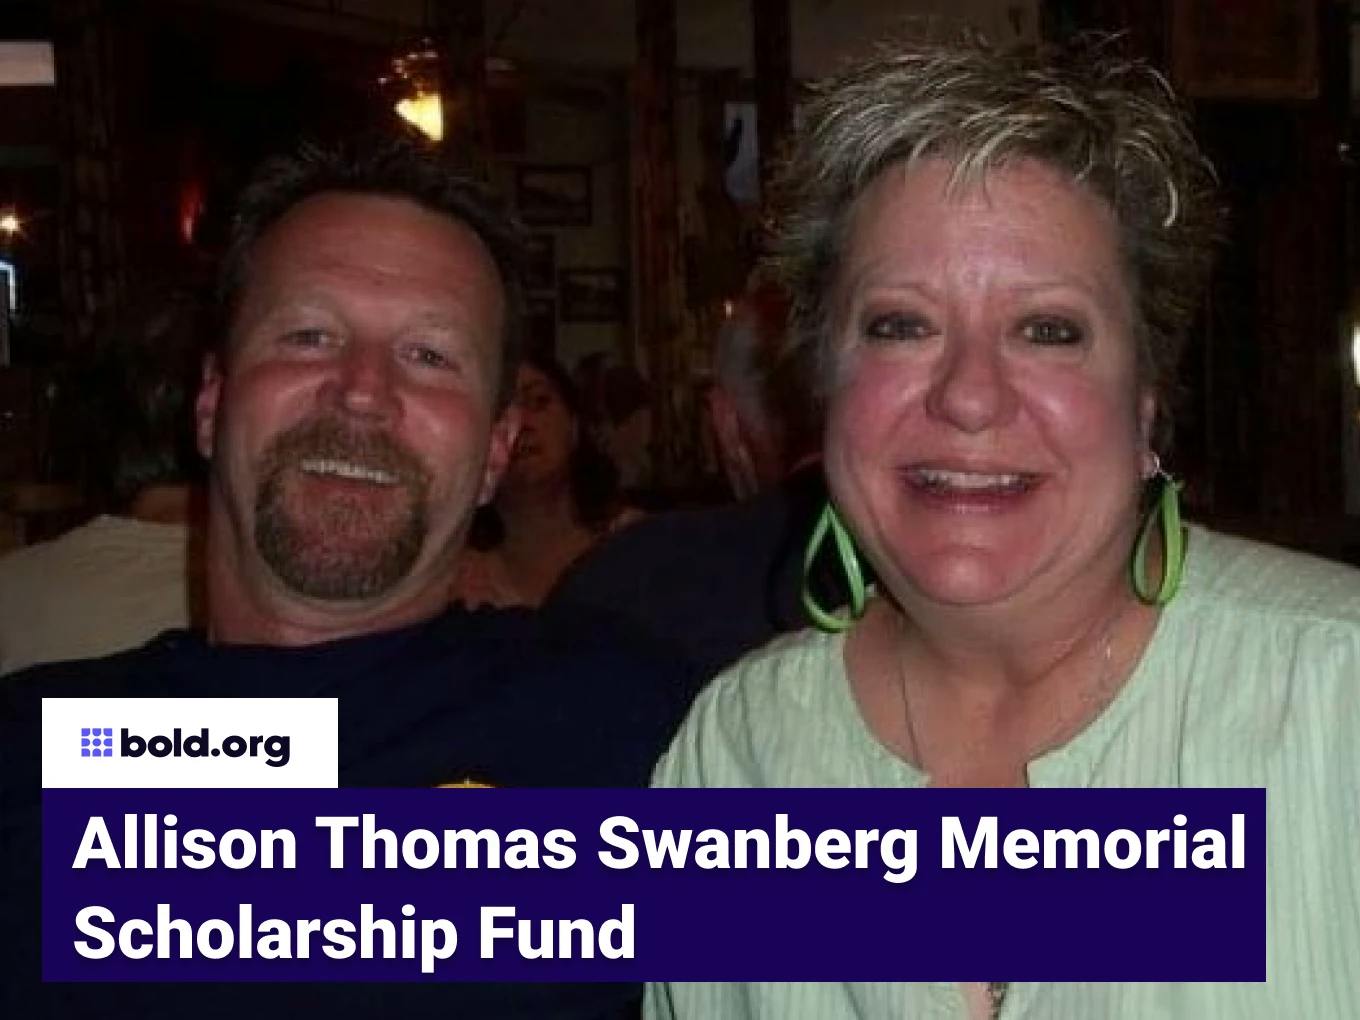 Allison Thomas Swanberg Memorial Scholarship Fund